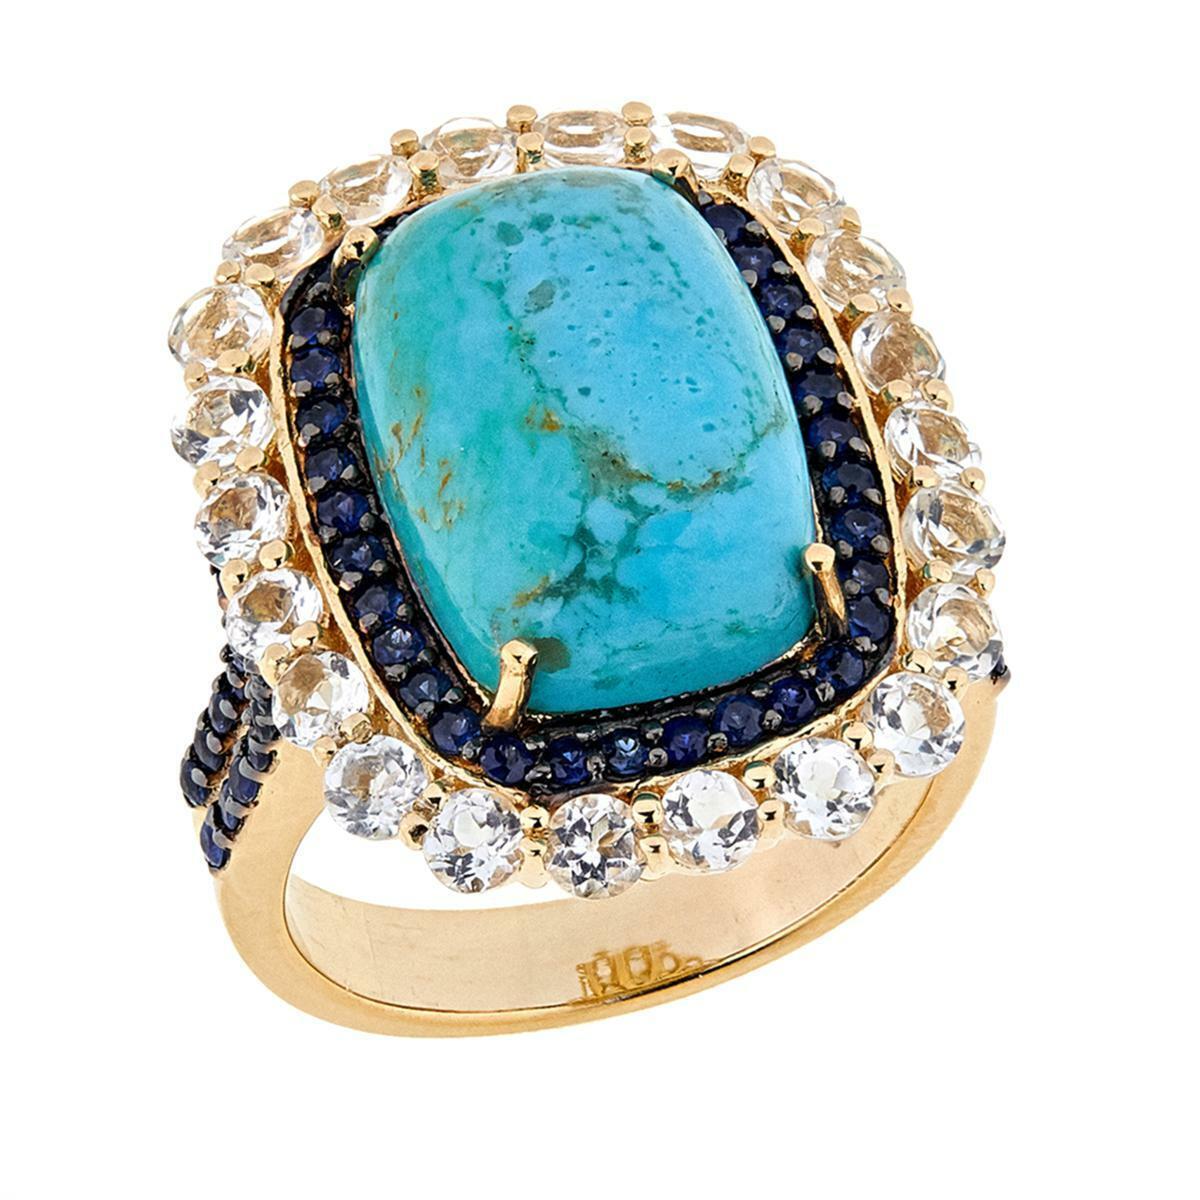 Paul Deasy Gem Kingman Turquoise, Sapphire And White Topaz Ring Size 8 Hsn $260